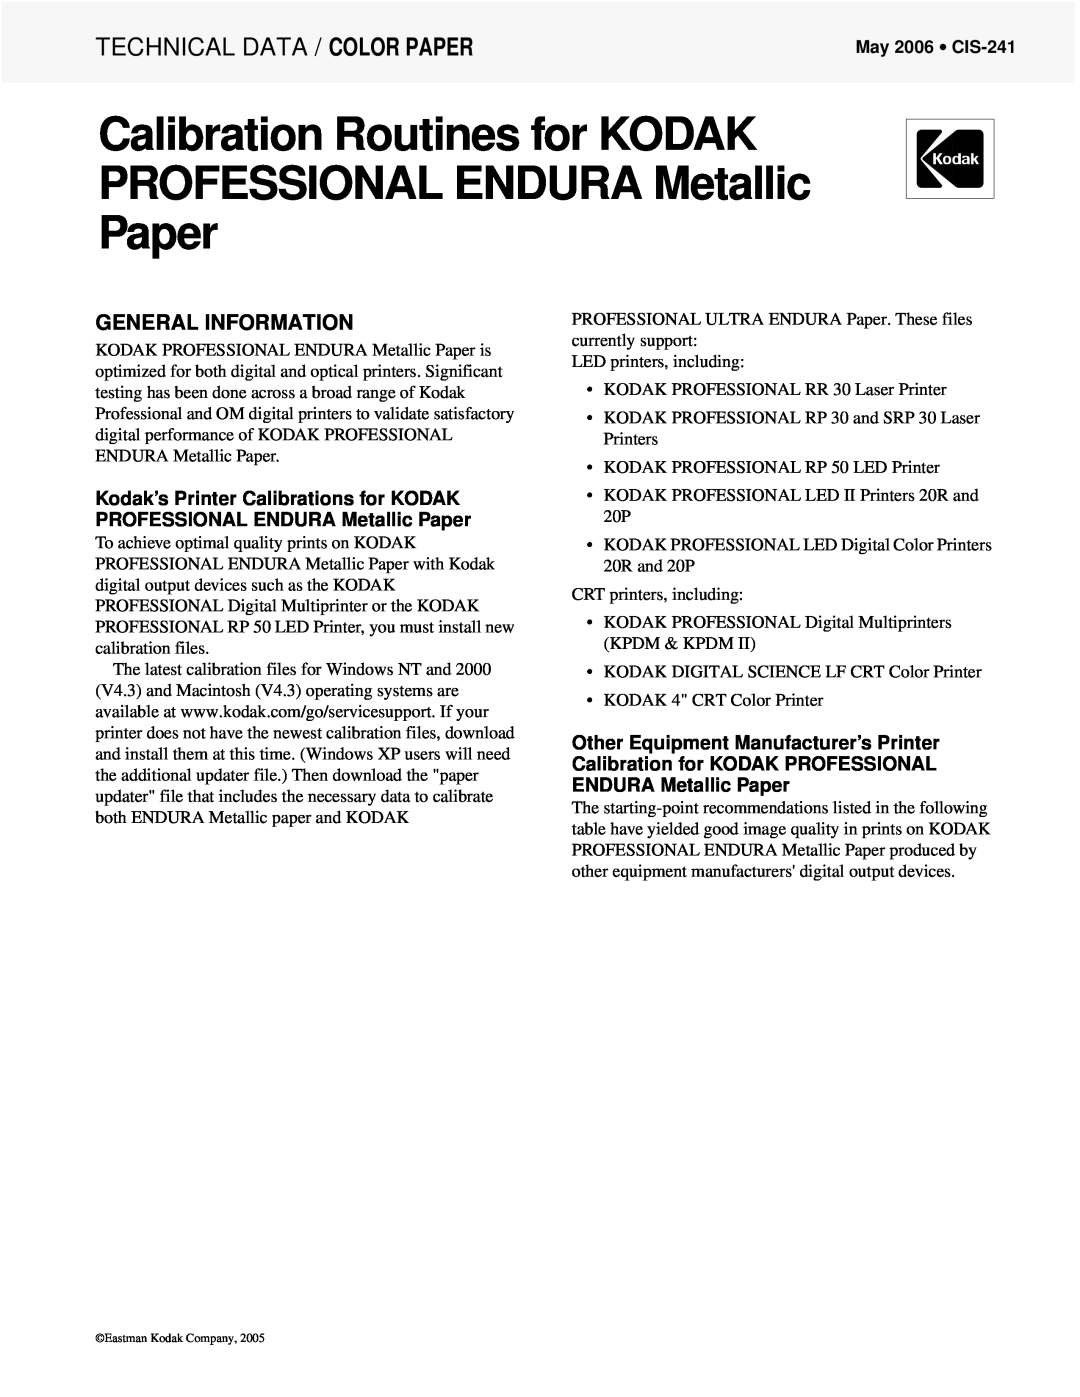 Kodak manual Technical Data / Color Paper, General Information, May 2006 CIS-241 